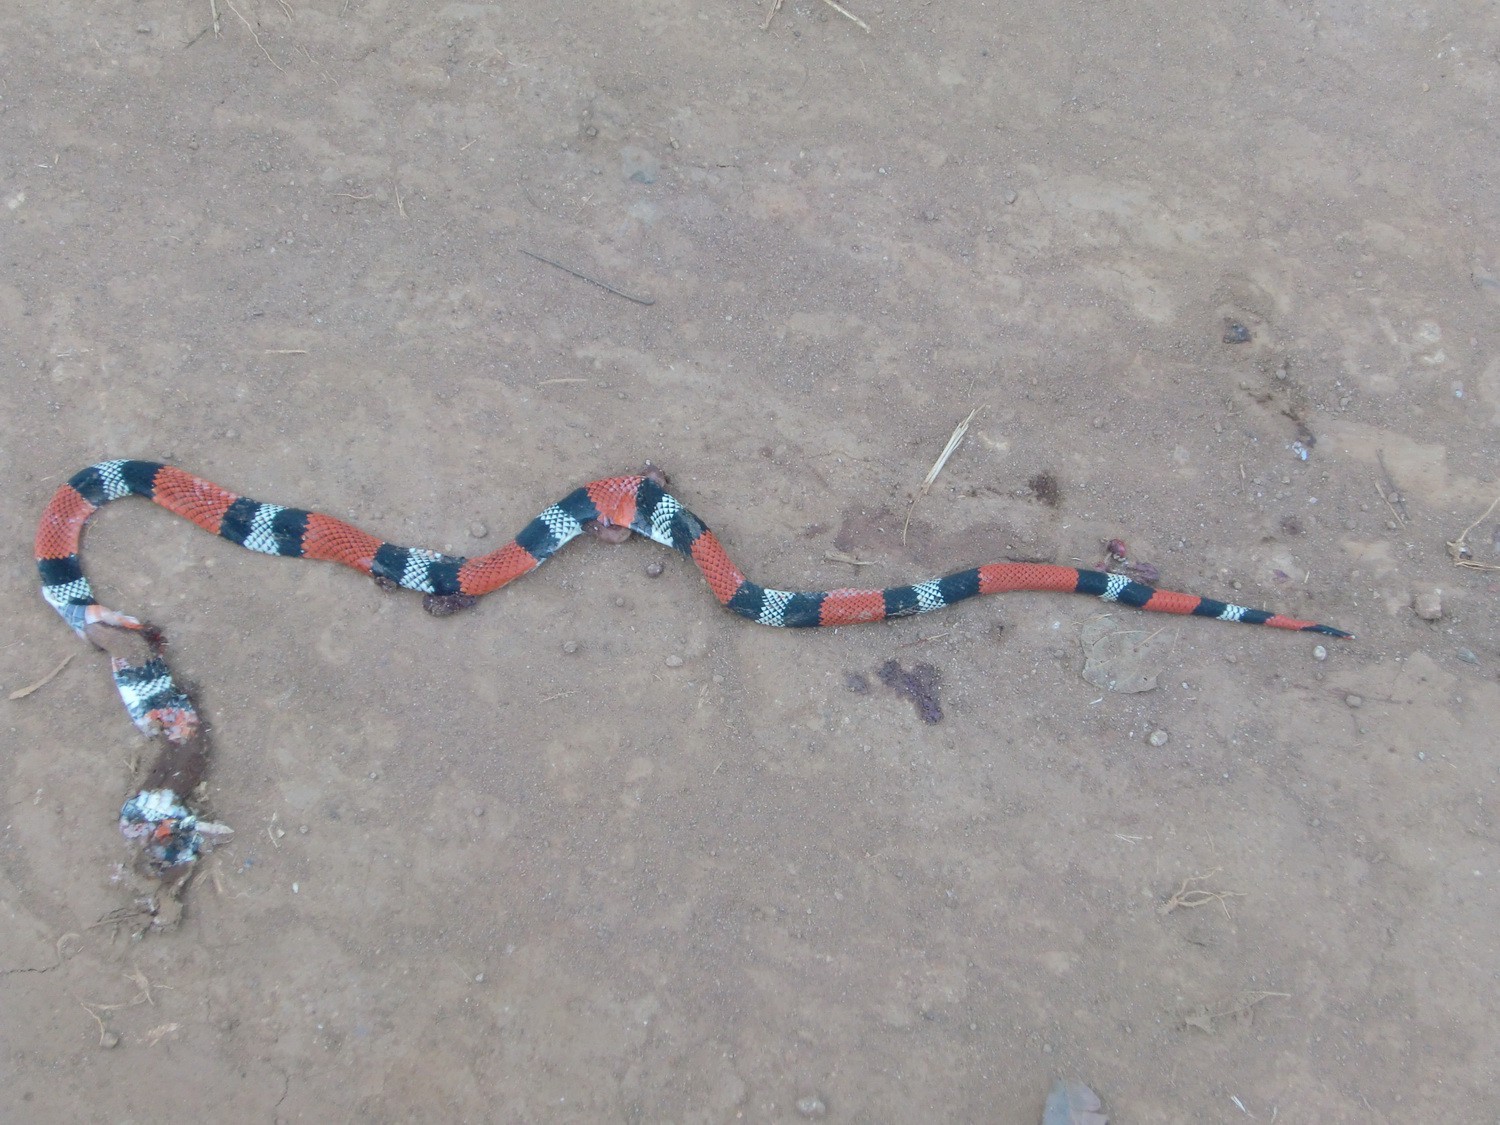 Very poisonous snake in the Yvytyruzu sanctuary - fortunately dead